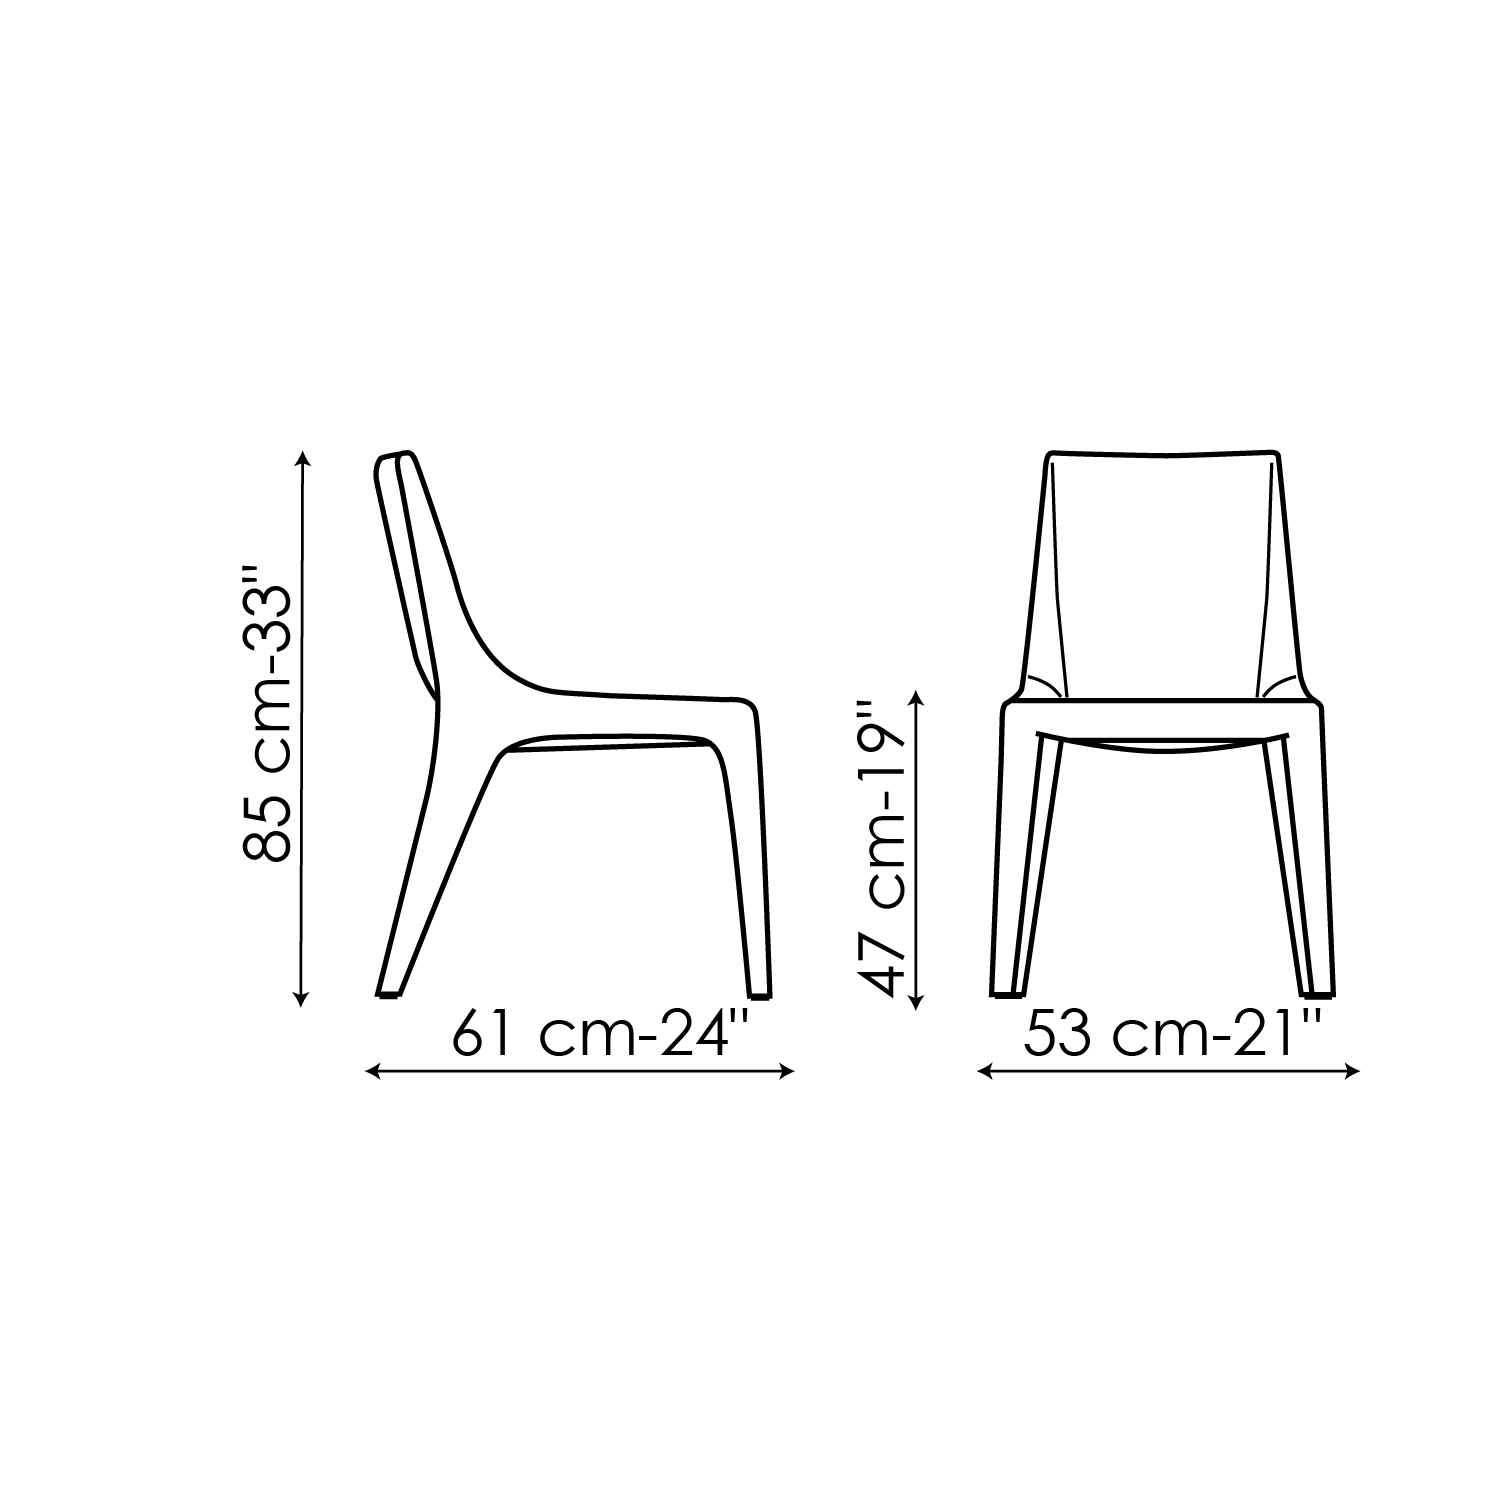 Tip toe chair - Furnivita